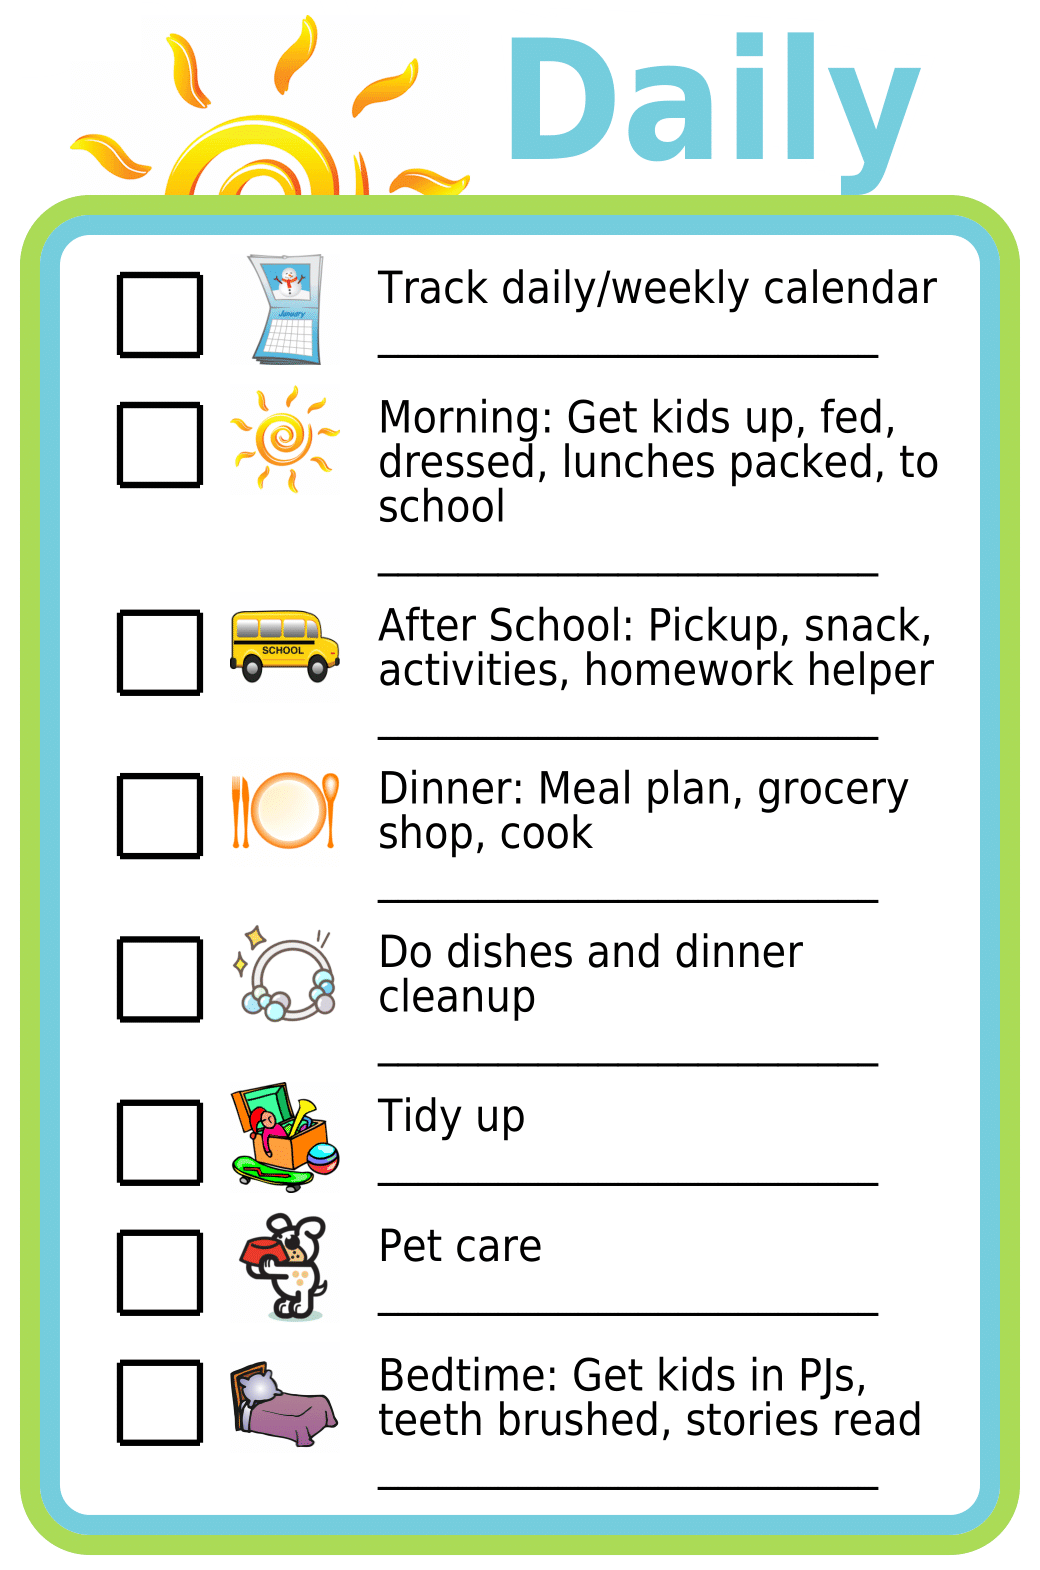 Editable worksheet showing 8 daily tasks: calendar, kids morning & bedtime, dinner, dishes, tidying, pet care